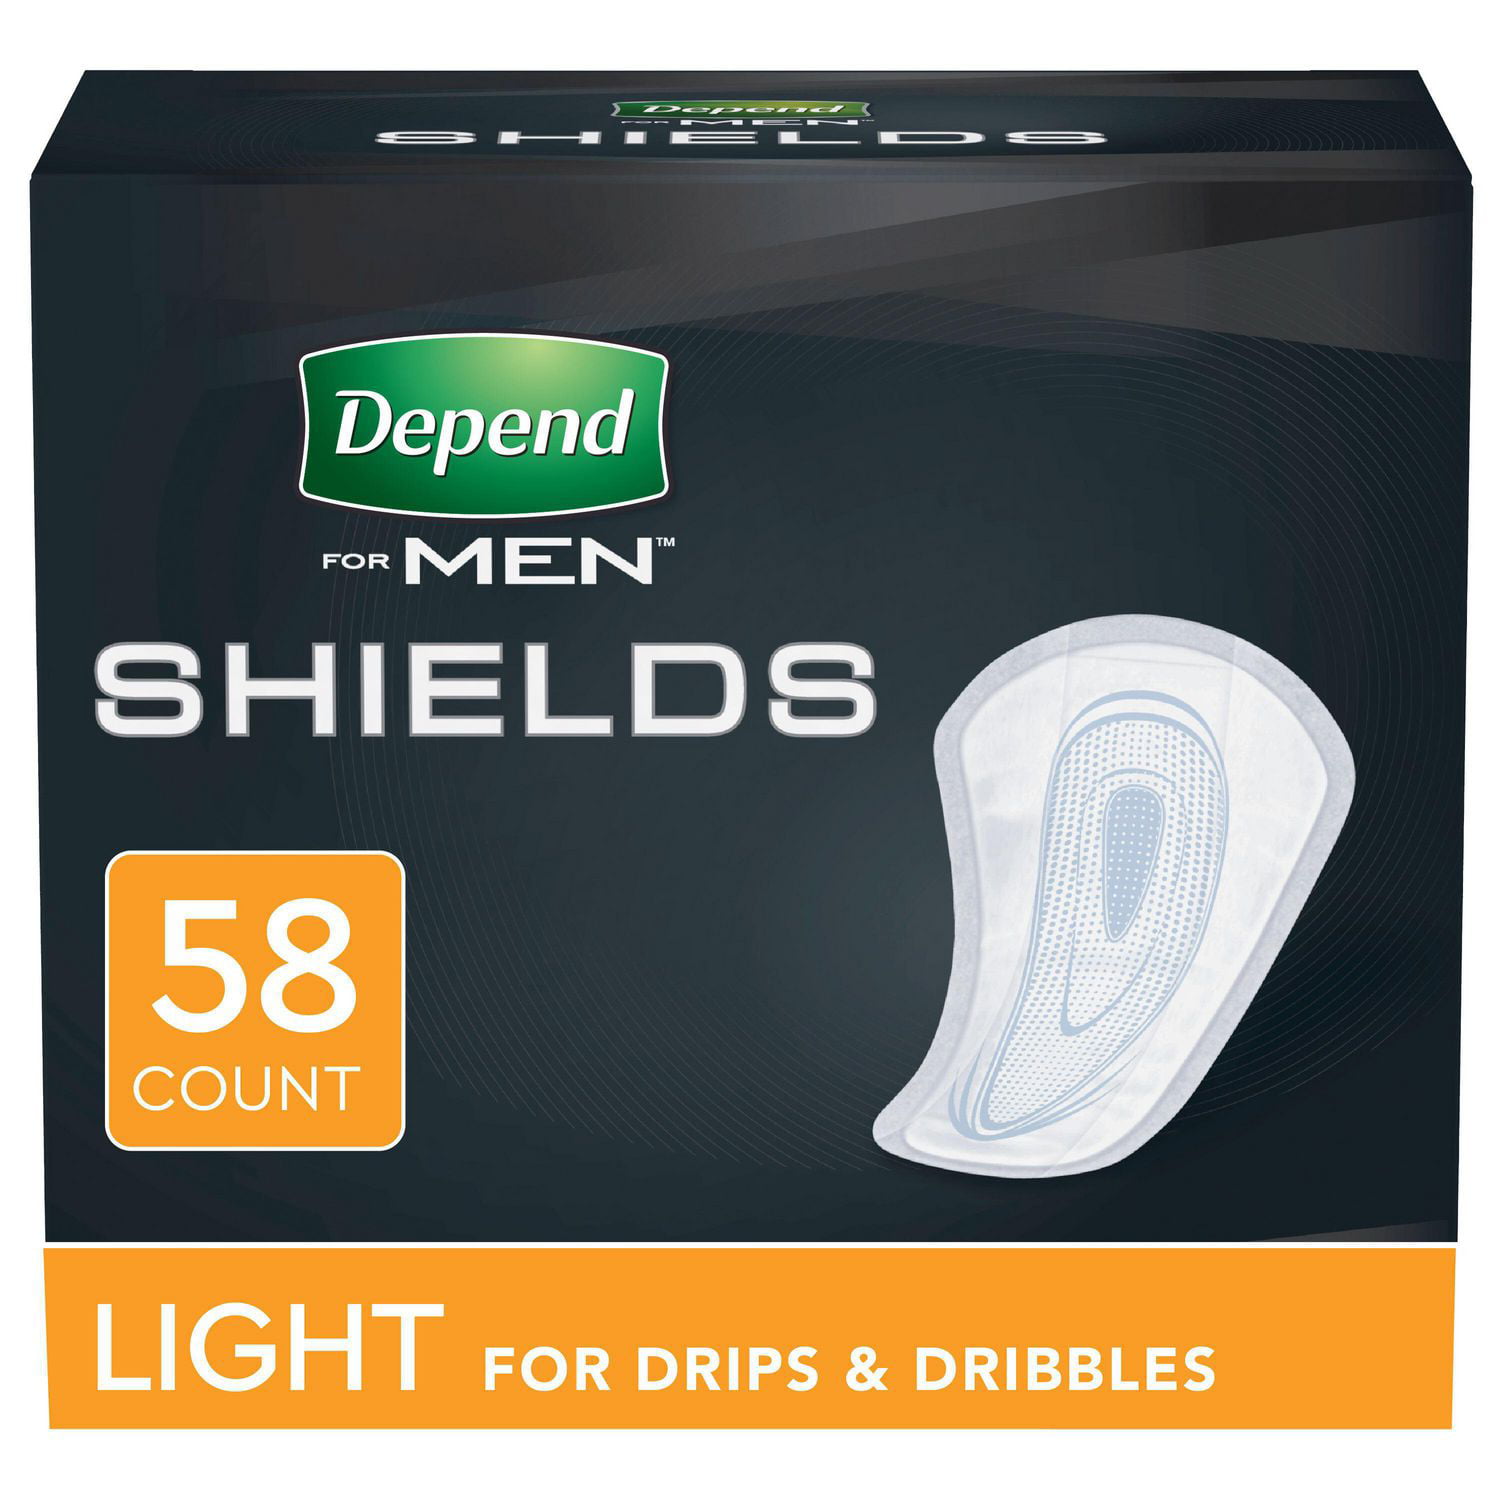 Depend Shields for Men Light Bladder Control Pad (58 Count), 58